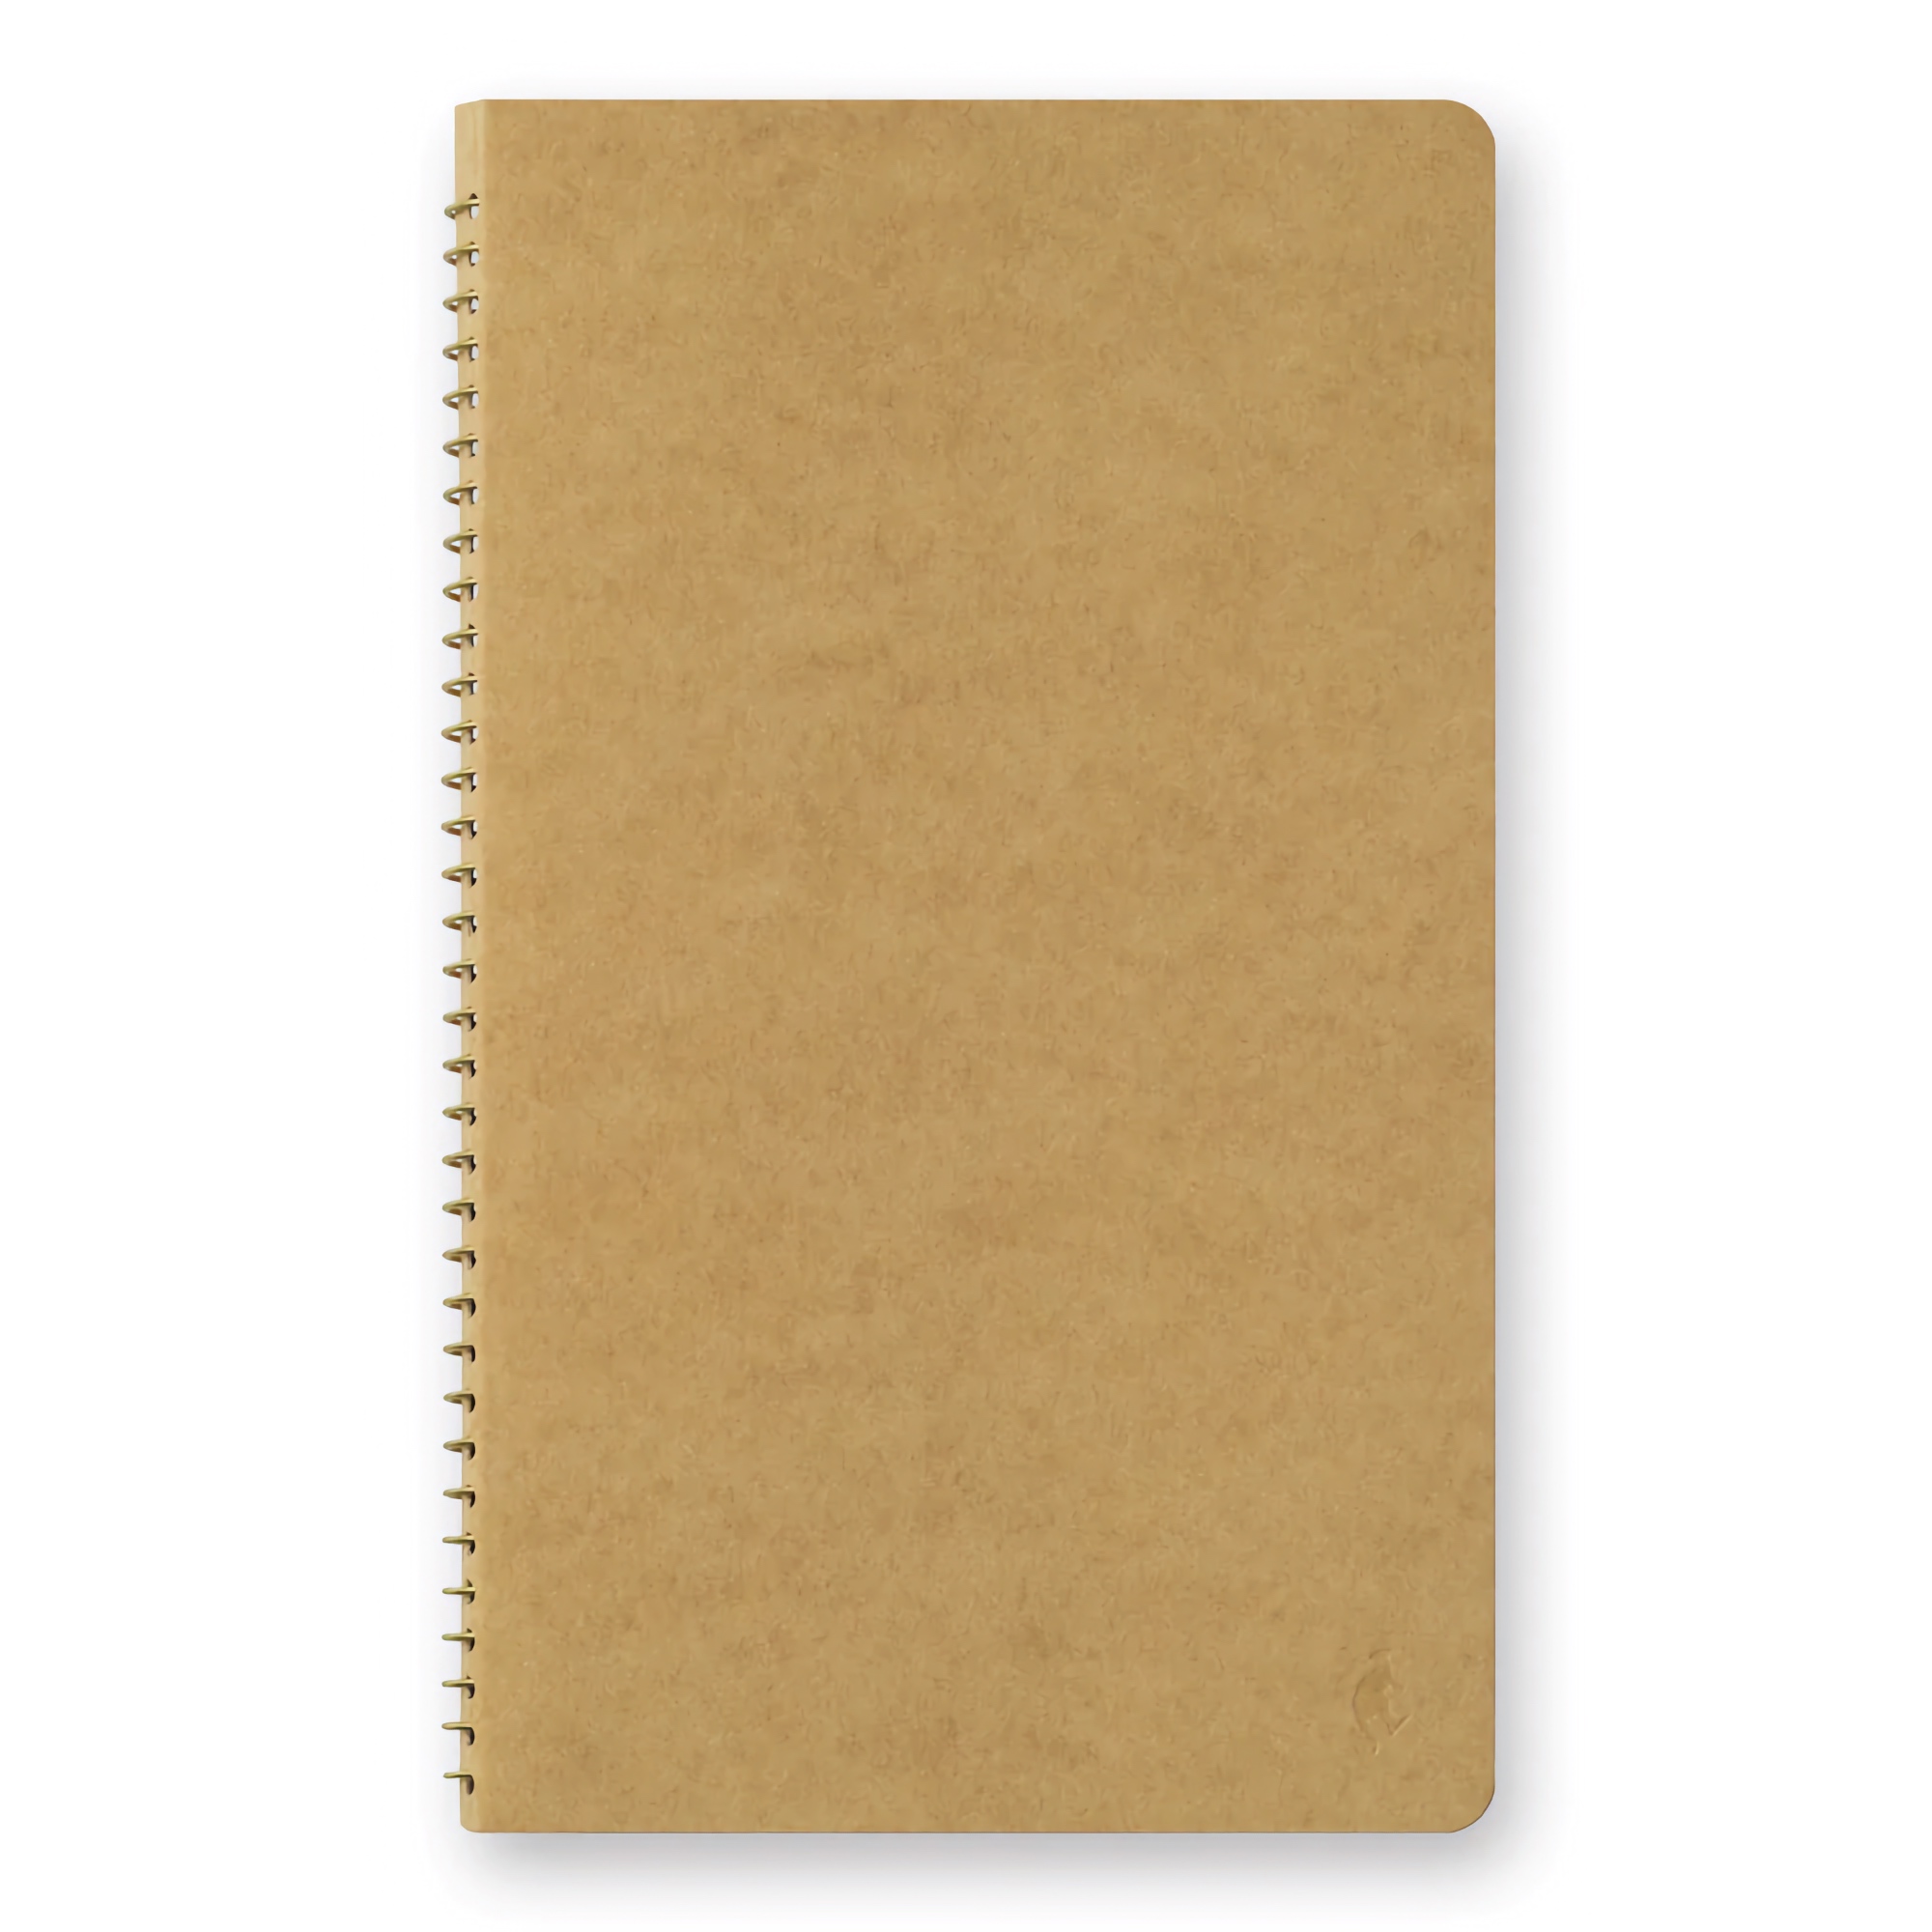 Traveler's Company Spiral Ring Notebook A5 Slim Paper Pocket